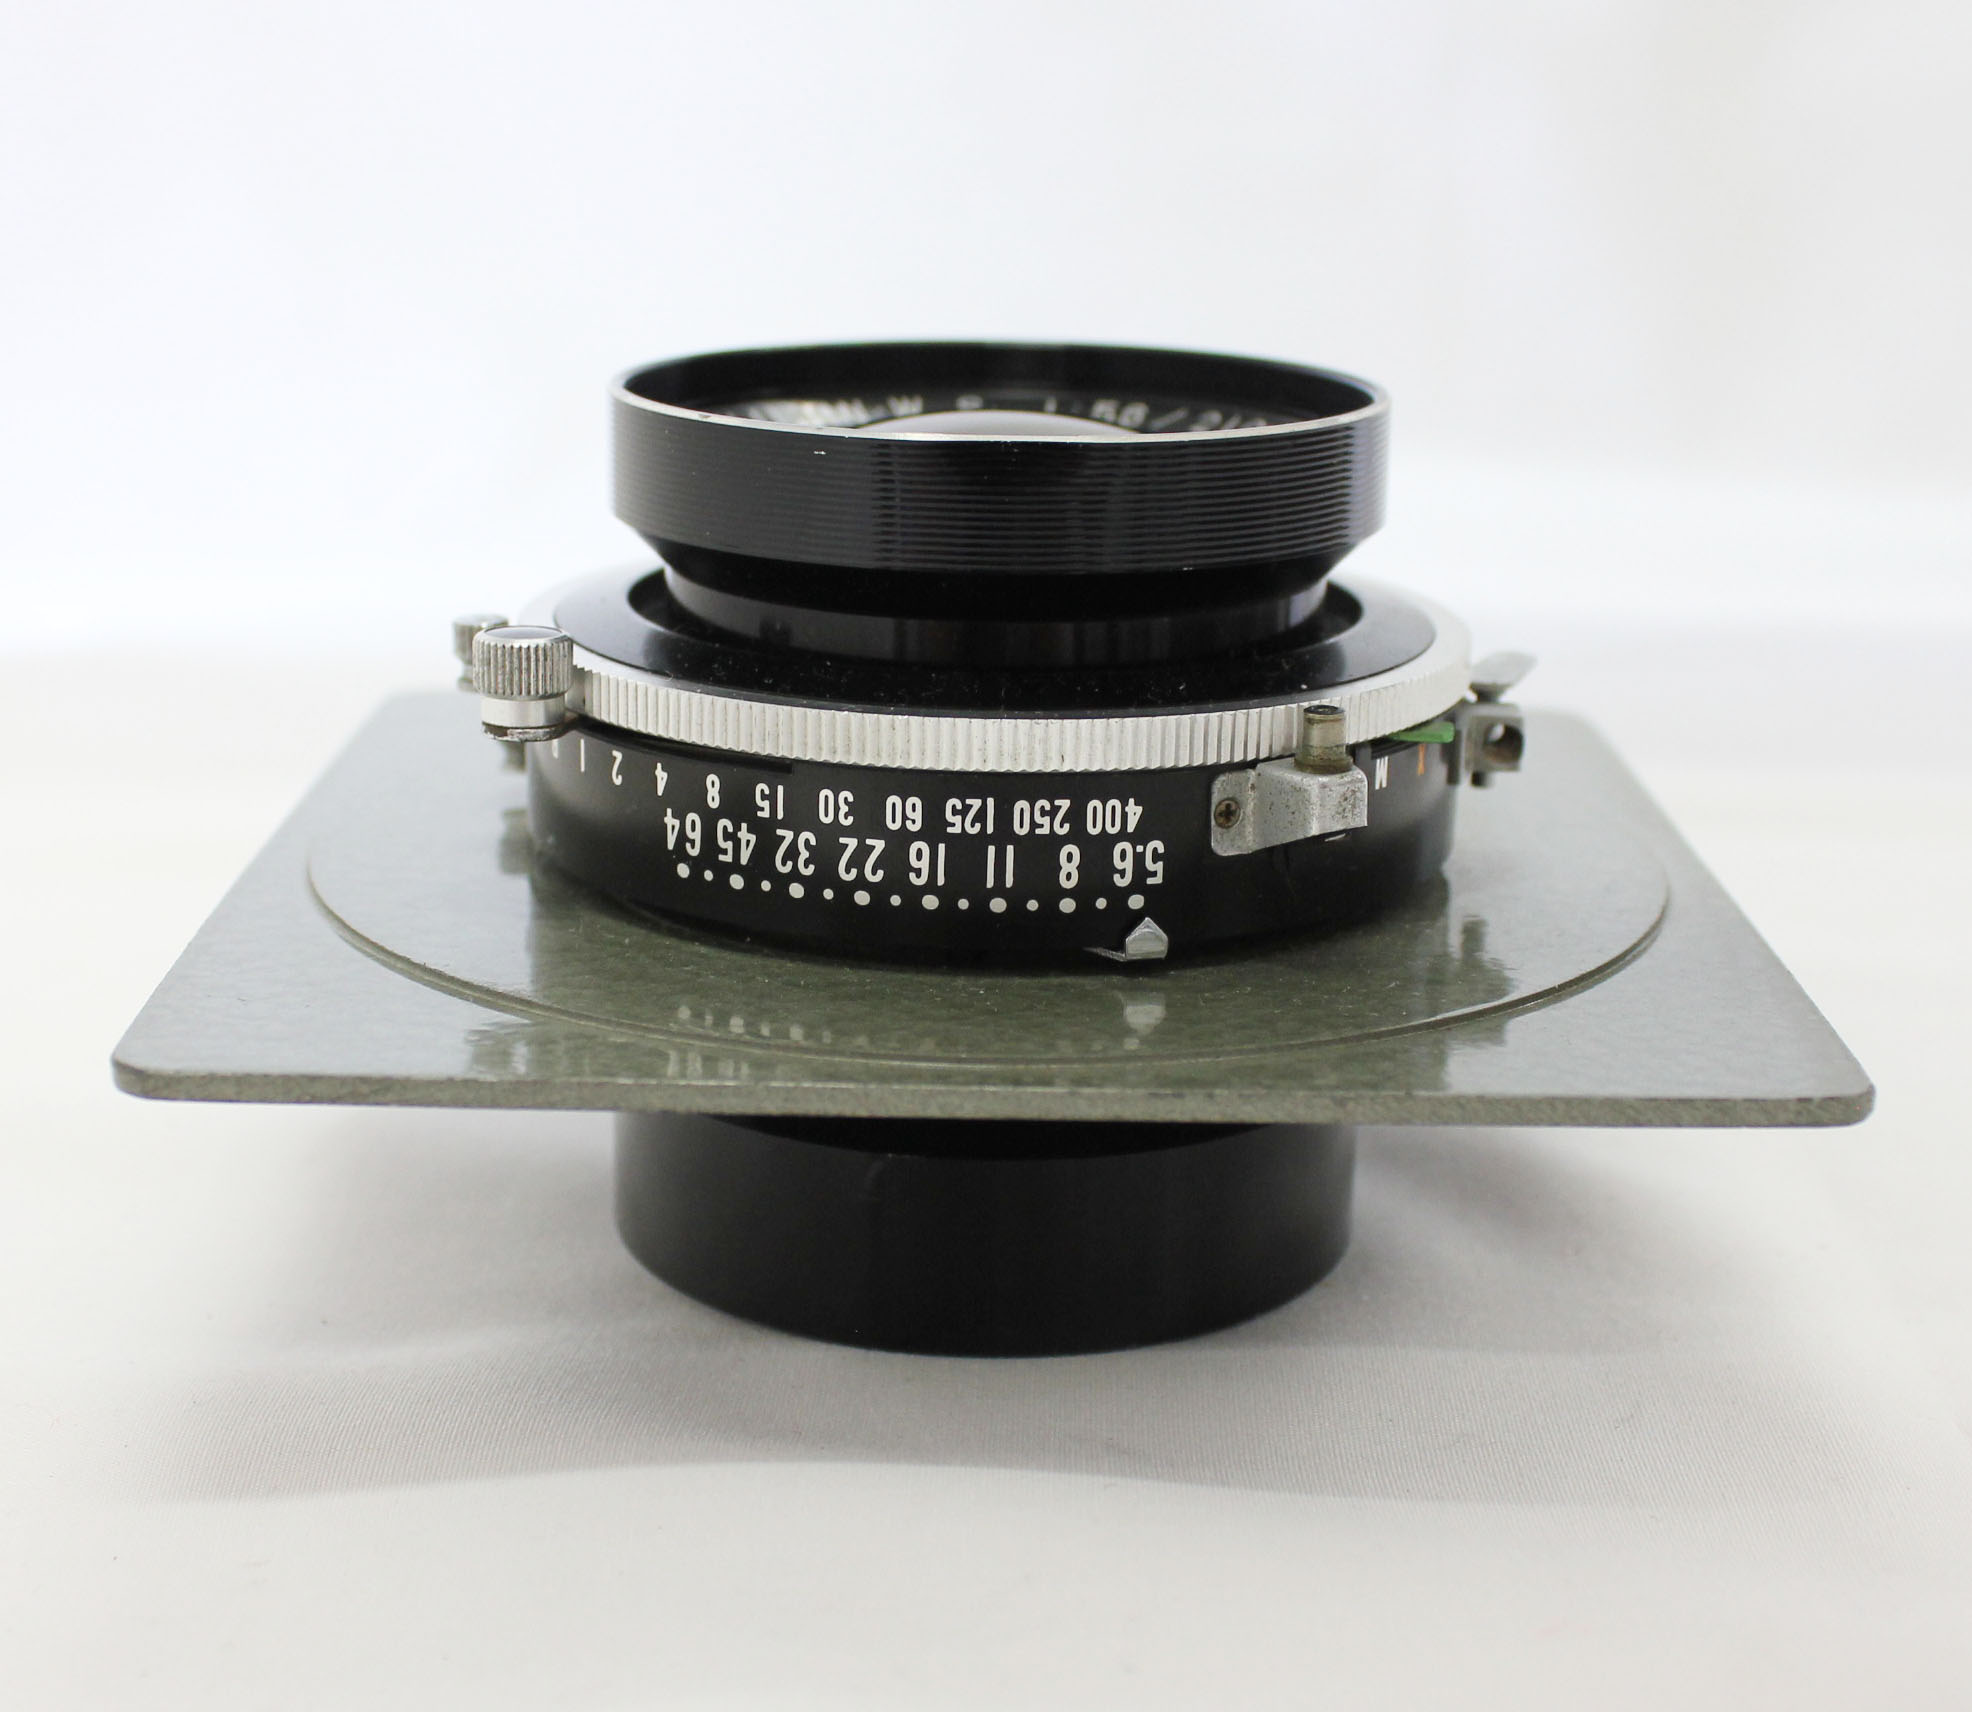 Fuji Fujinon W S 210mm F/5.6 4x5 Large Format Lens with Seiko 